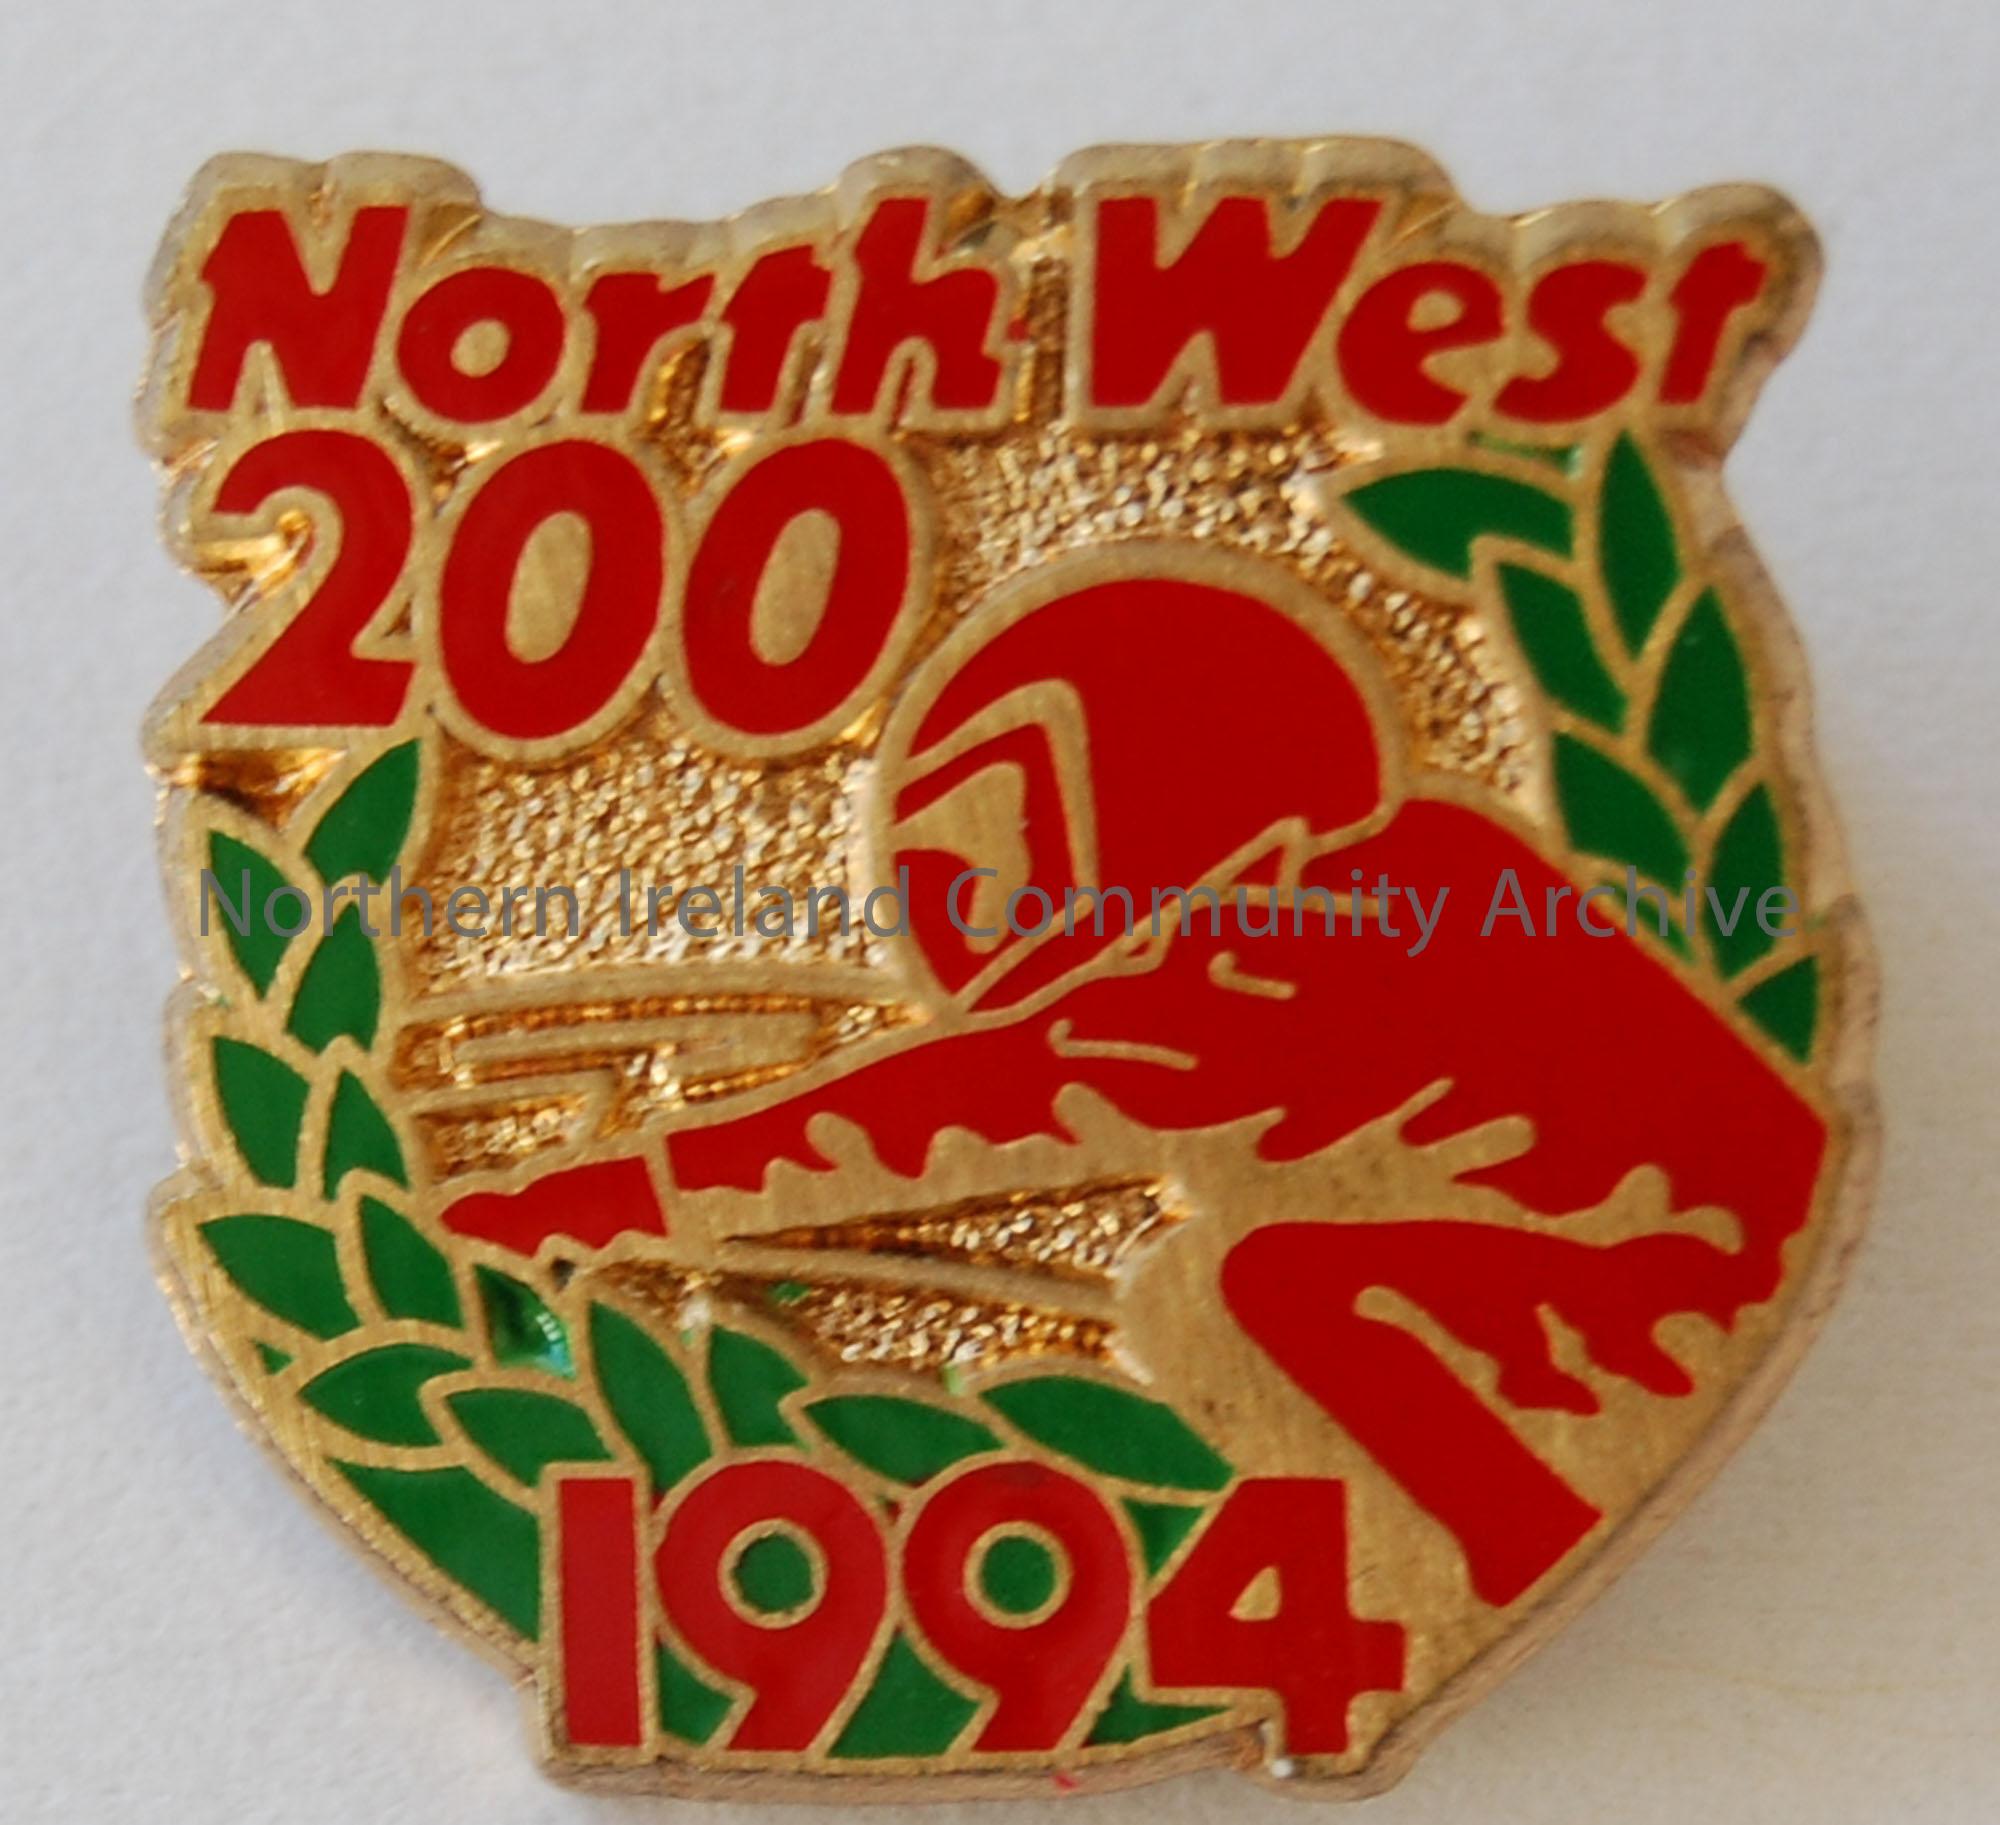 North West 200 badge, 1994